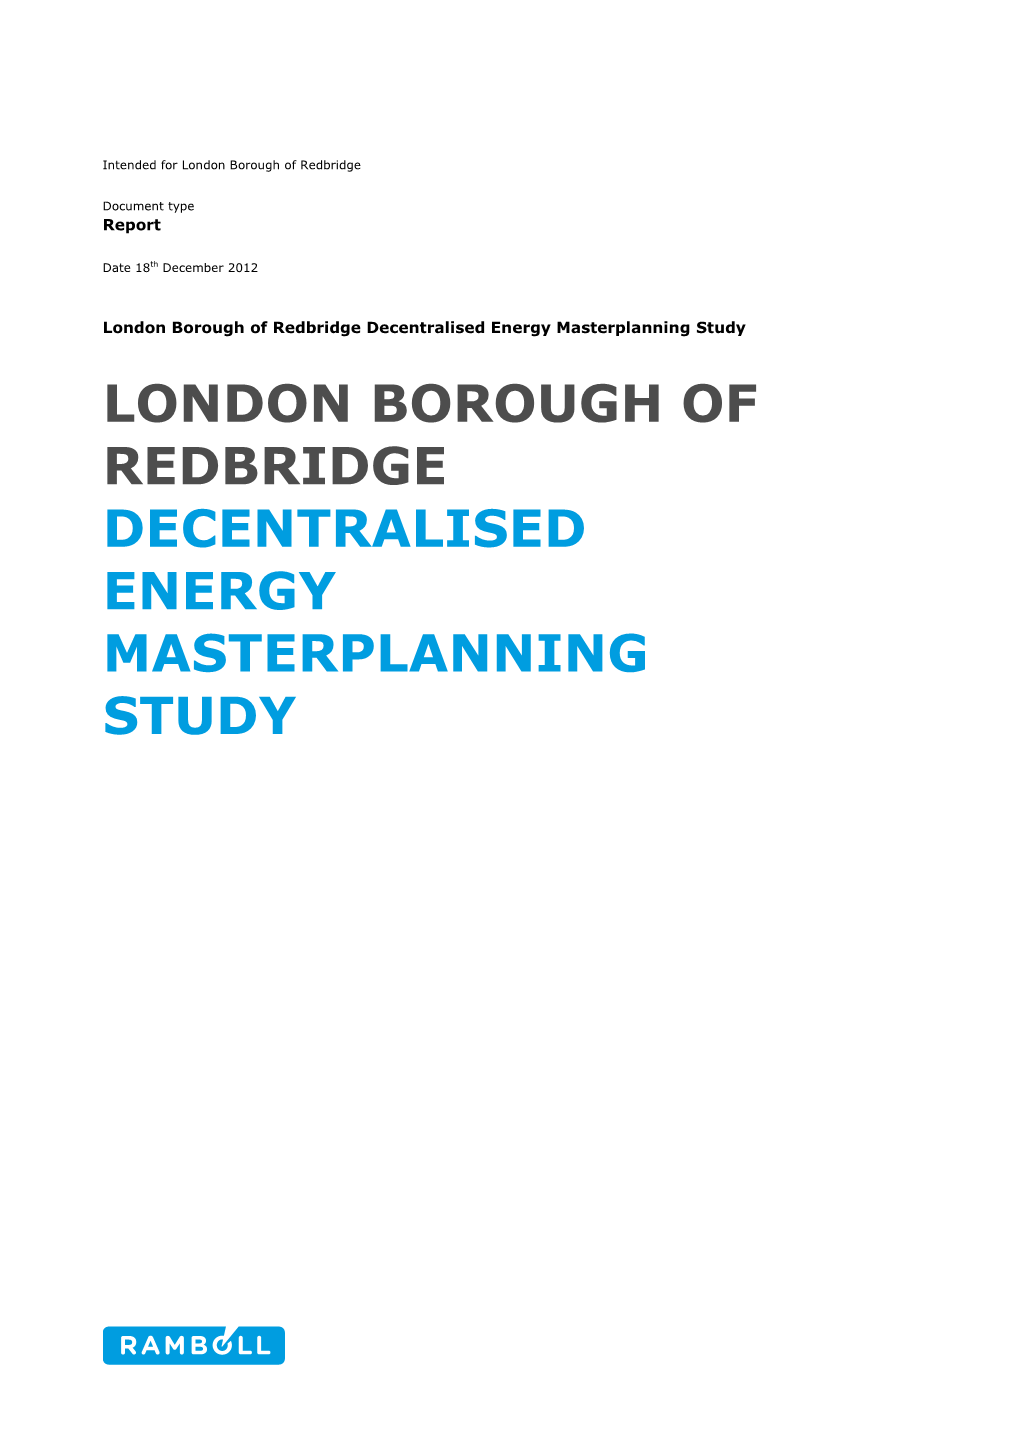 Redbridge Decentralised Energy Masterplanning Study